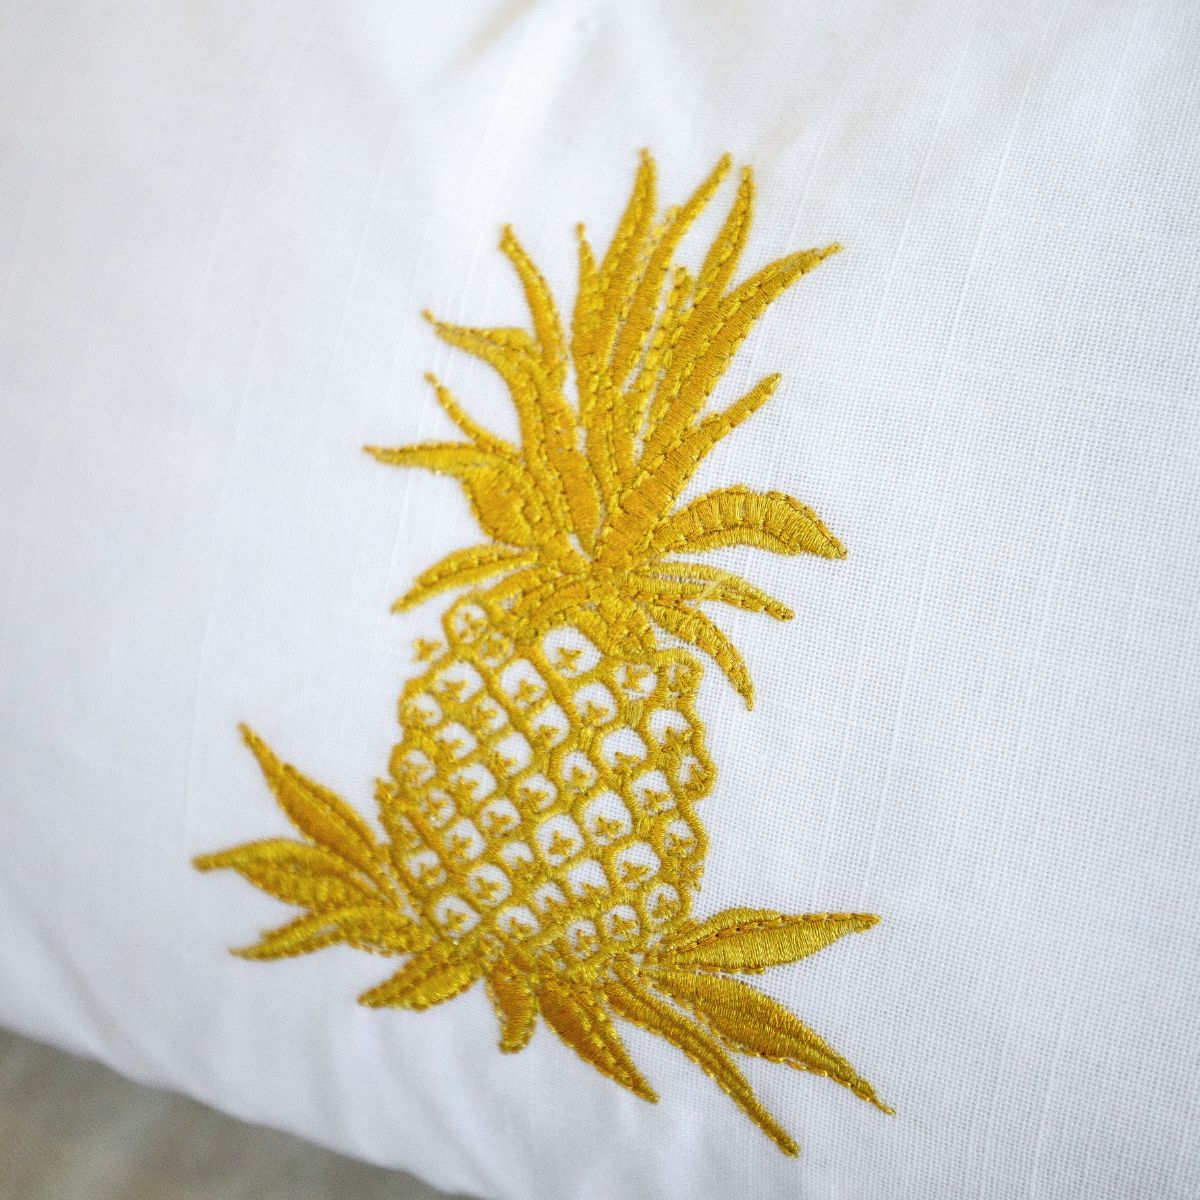 HABANA White and Gold Pineapple Cushion Cover  | Hamptons Home